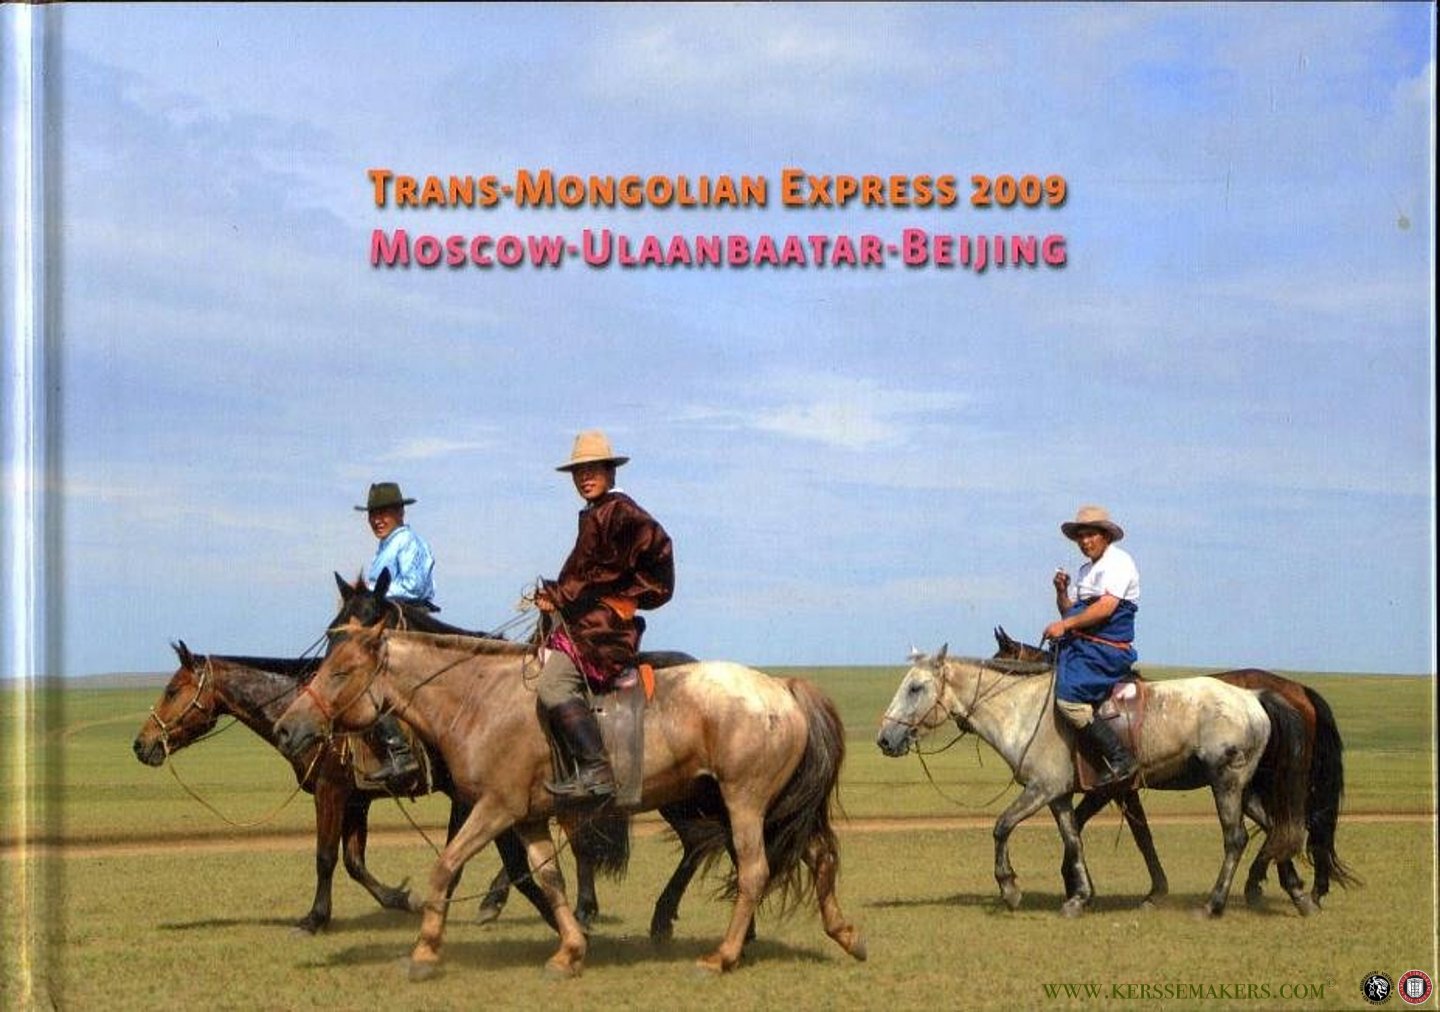 JONKERS, Karin - Trans-Mongolian Express 2009. Moscow - Ulaanbaatar - Beijing